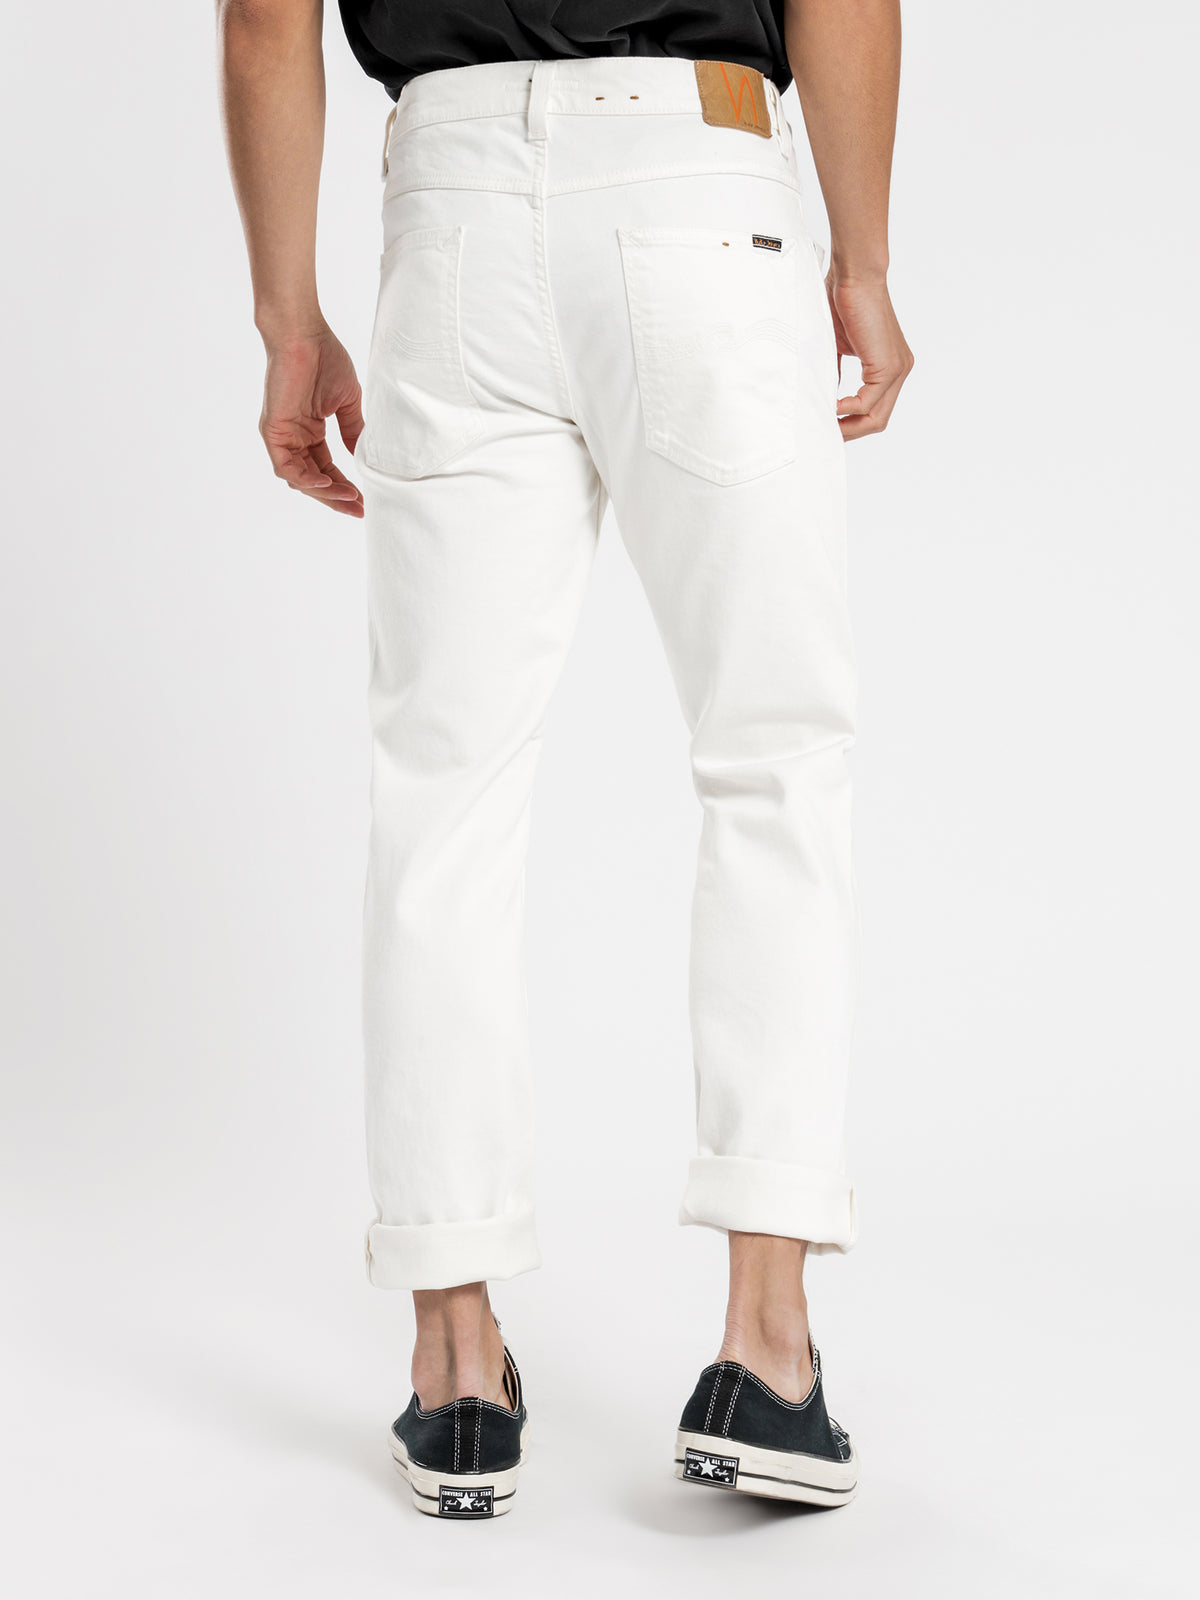 Lean Dean Jeans in Off White